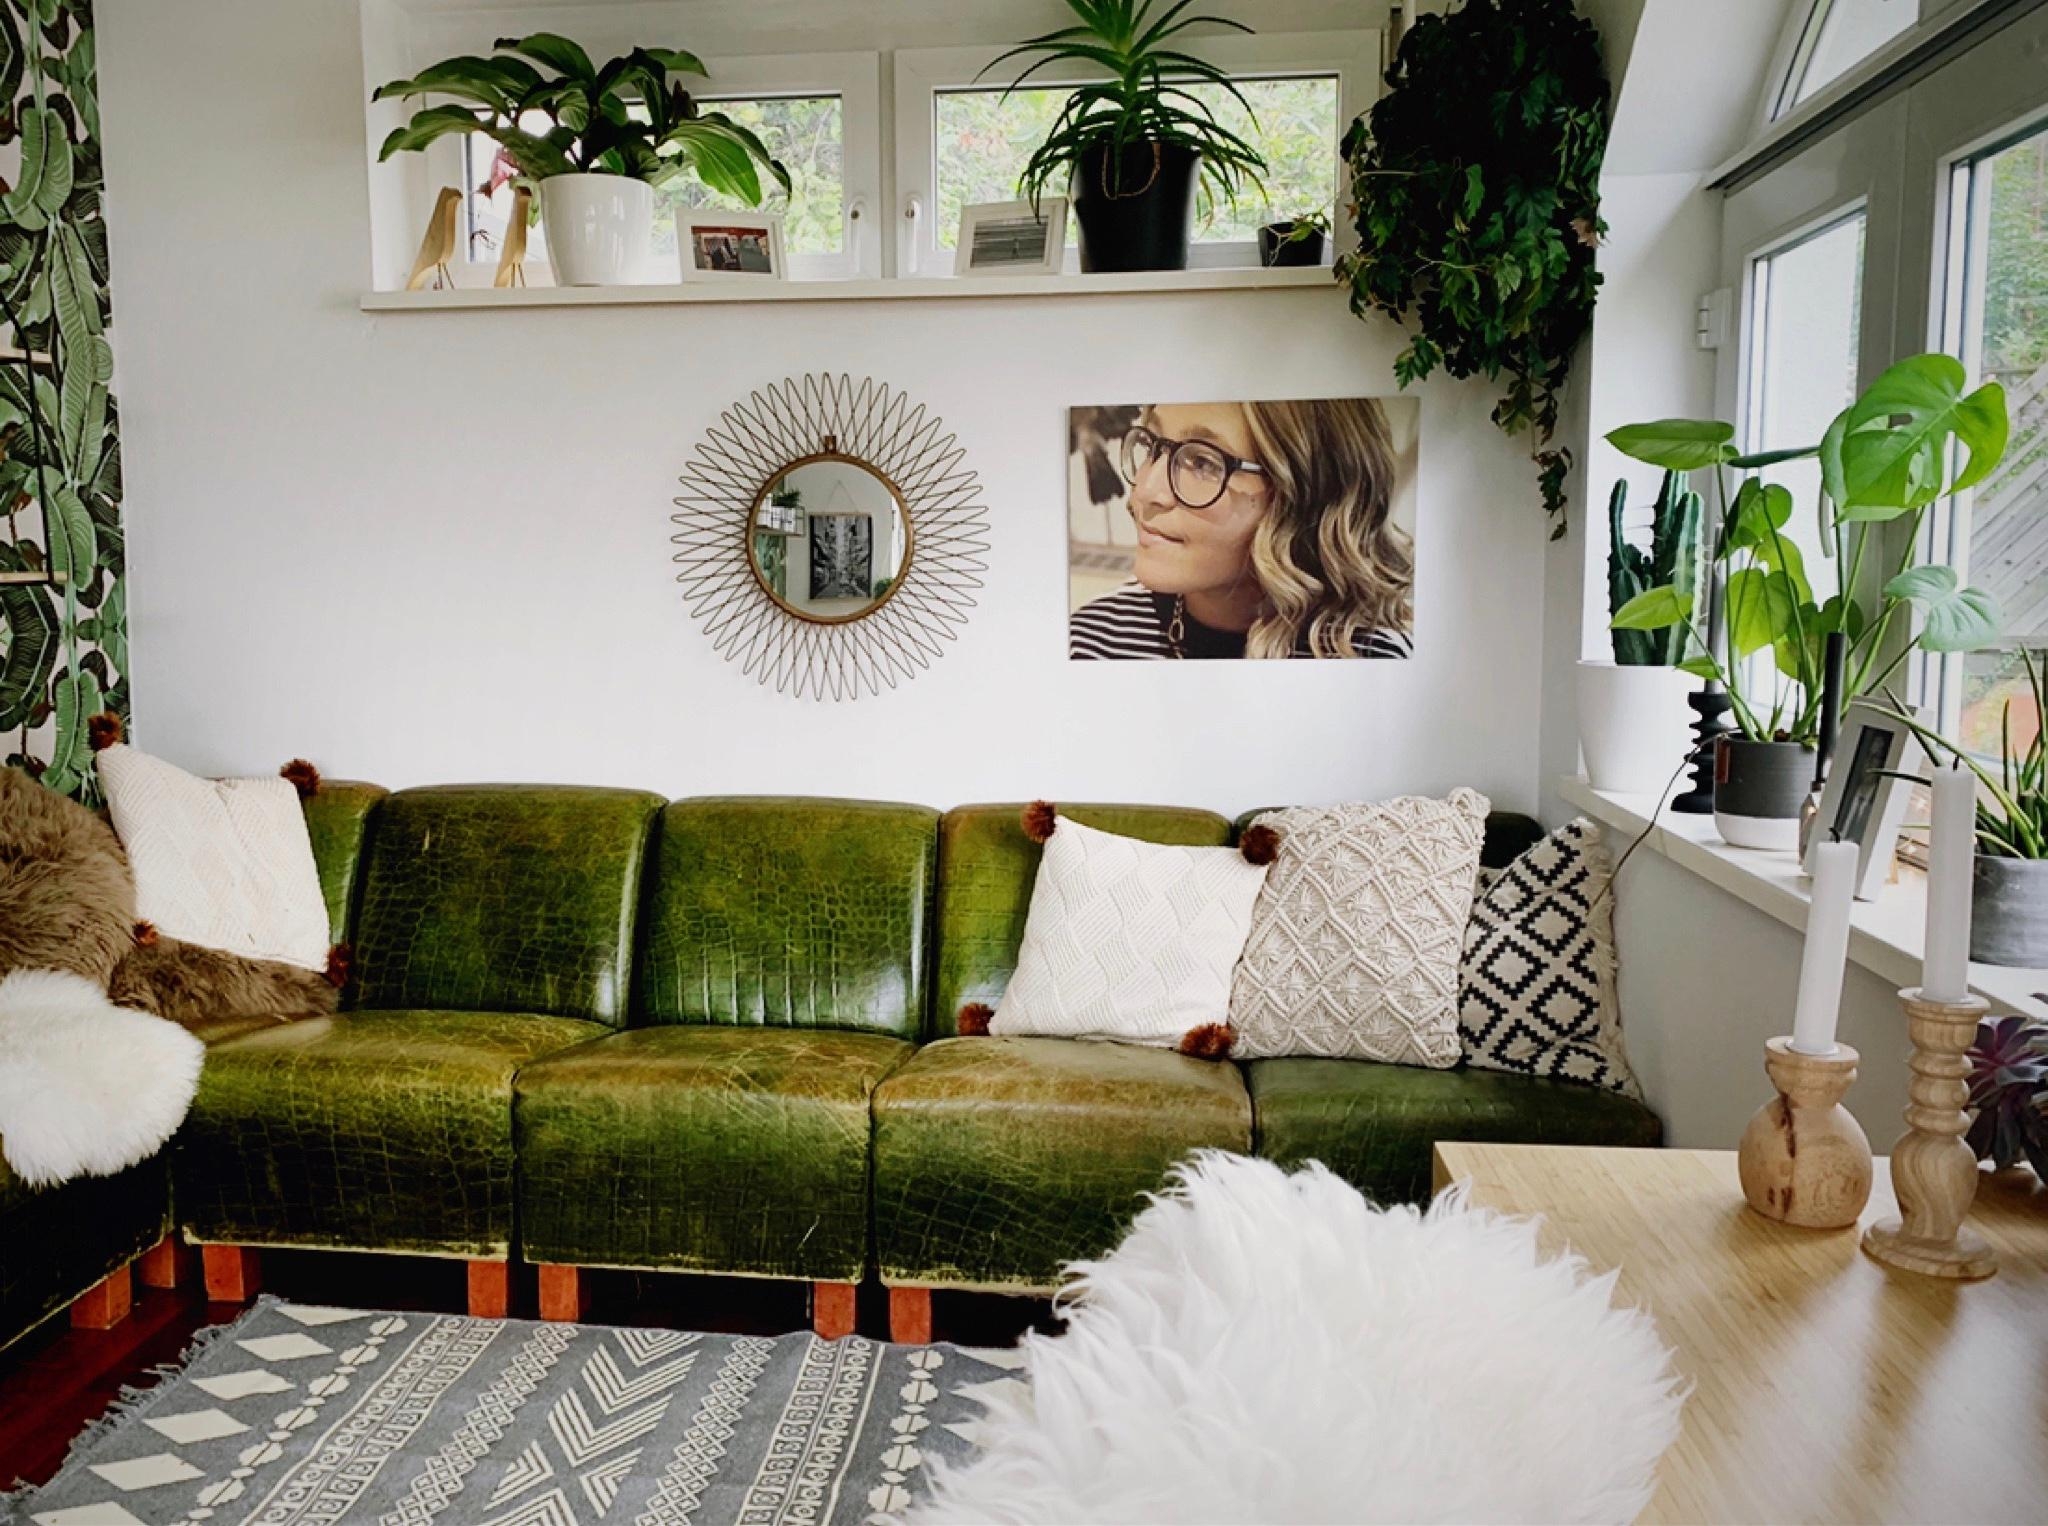 Das Sofa ruft... #chillroom #grünundweiss #pflanzenliebe 